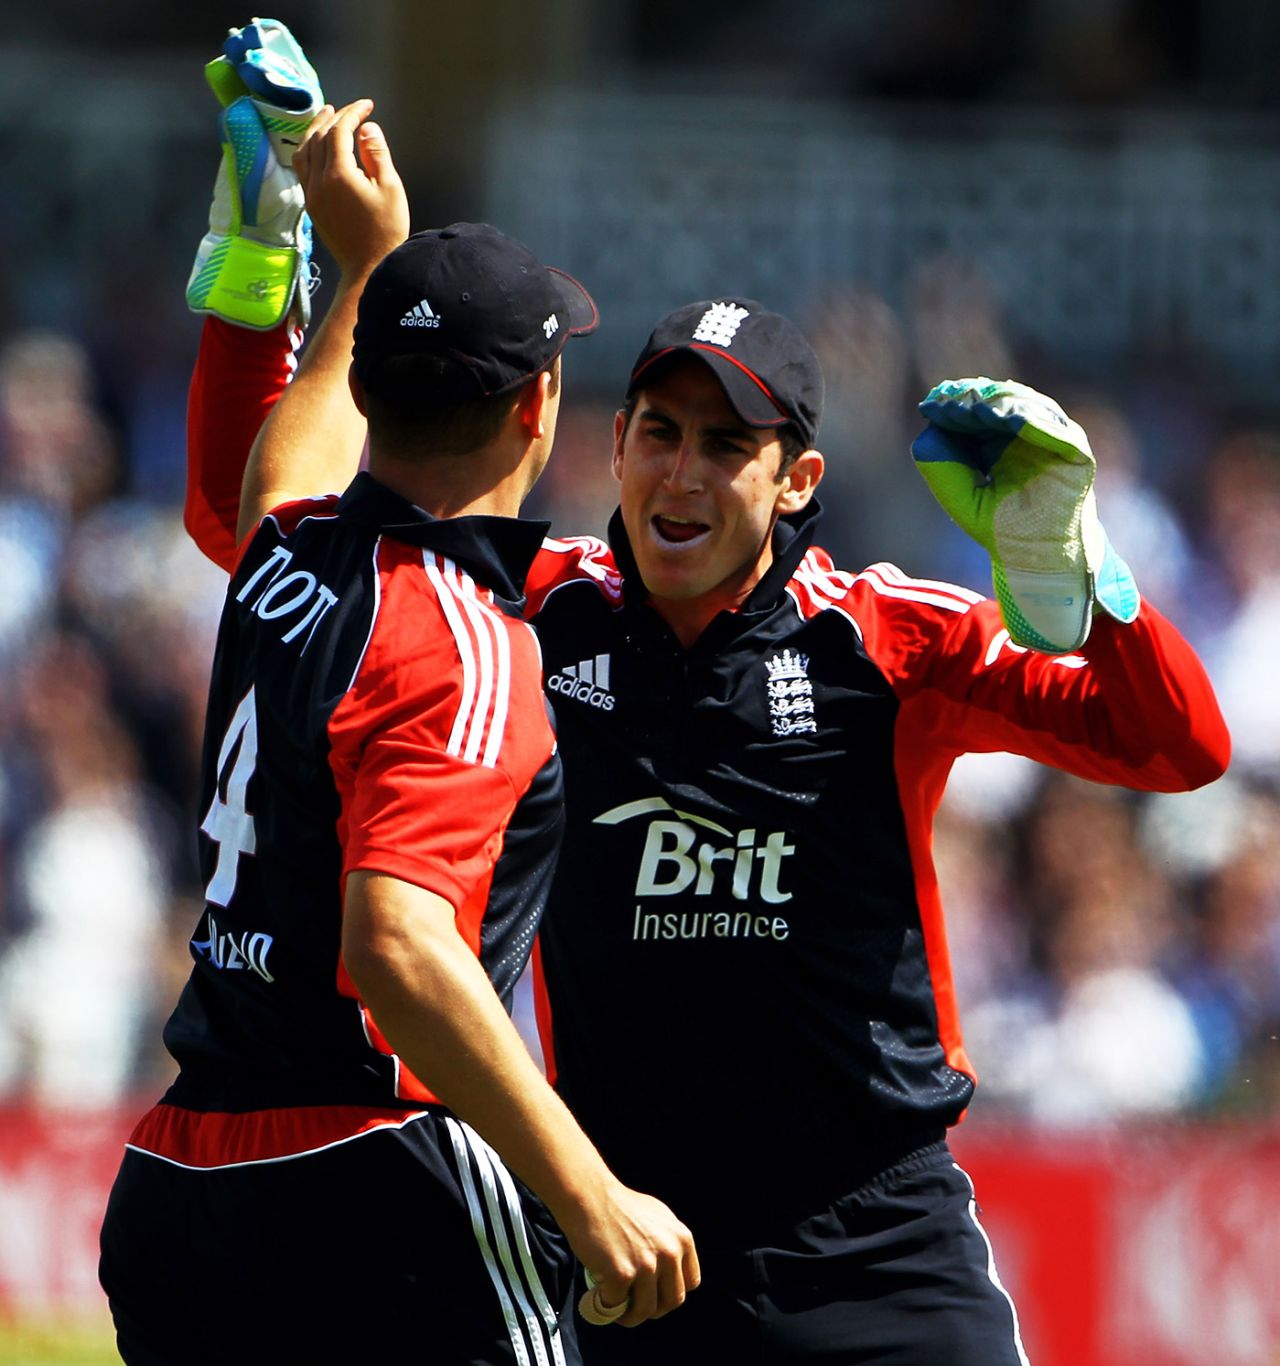 Jonathan Trott and Craig Kieswetter celebrate a wicket, England v Sri Lanka, 4th ODI, Trent Bridge, July 6 2011